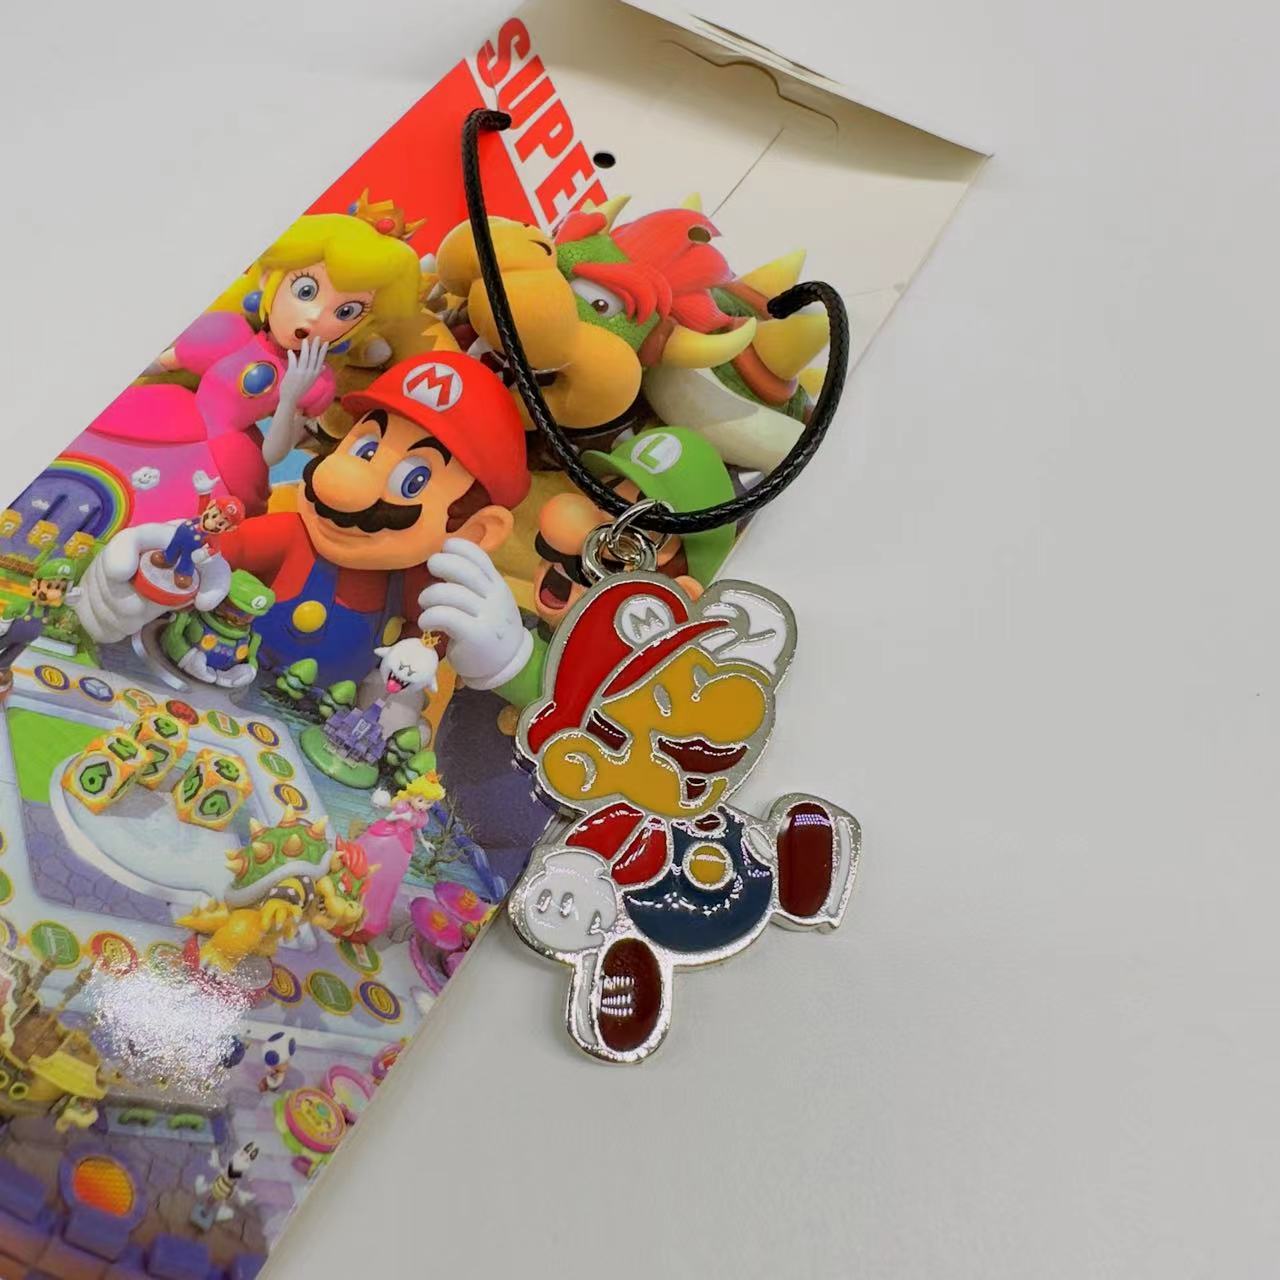 super Mario anime keychain